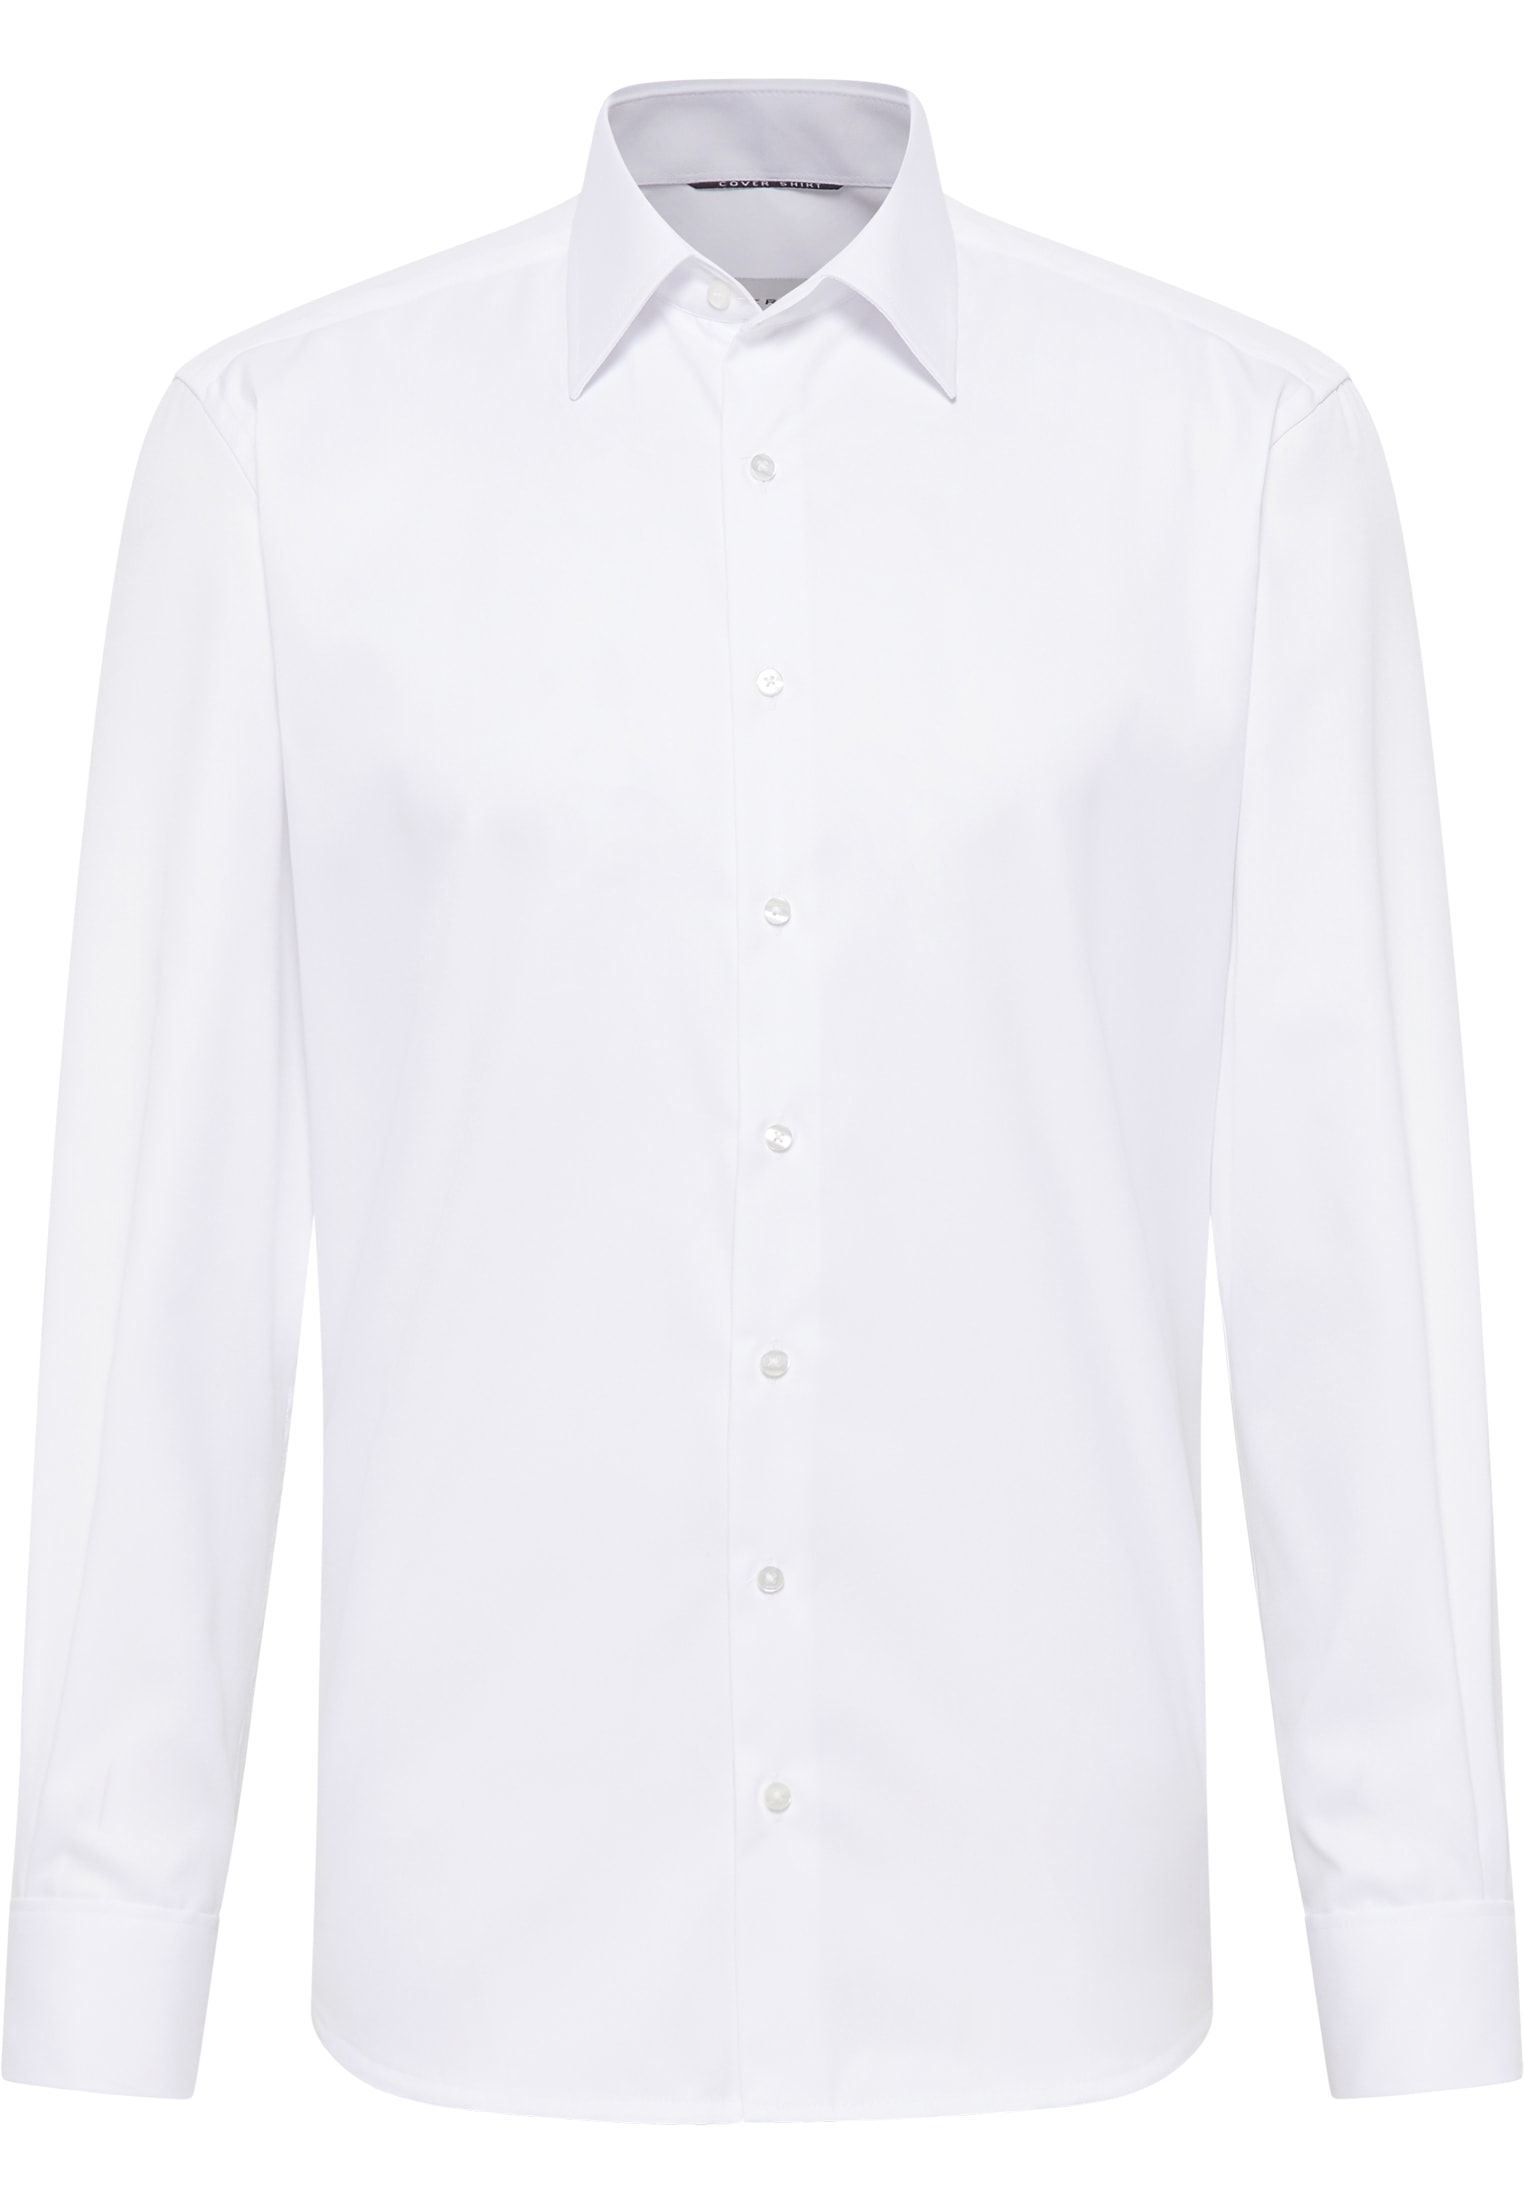 COMFORT FIT Cover Shirt in | unifarben | 1SH05509-00-01-41-1/1 weiß weiß | Langarm 41 